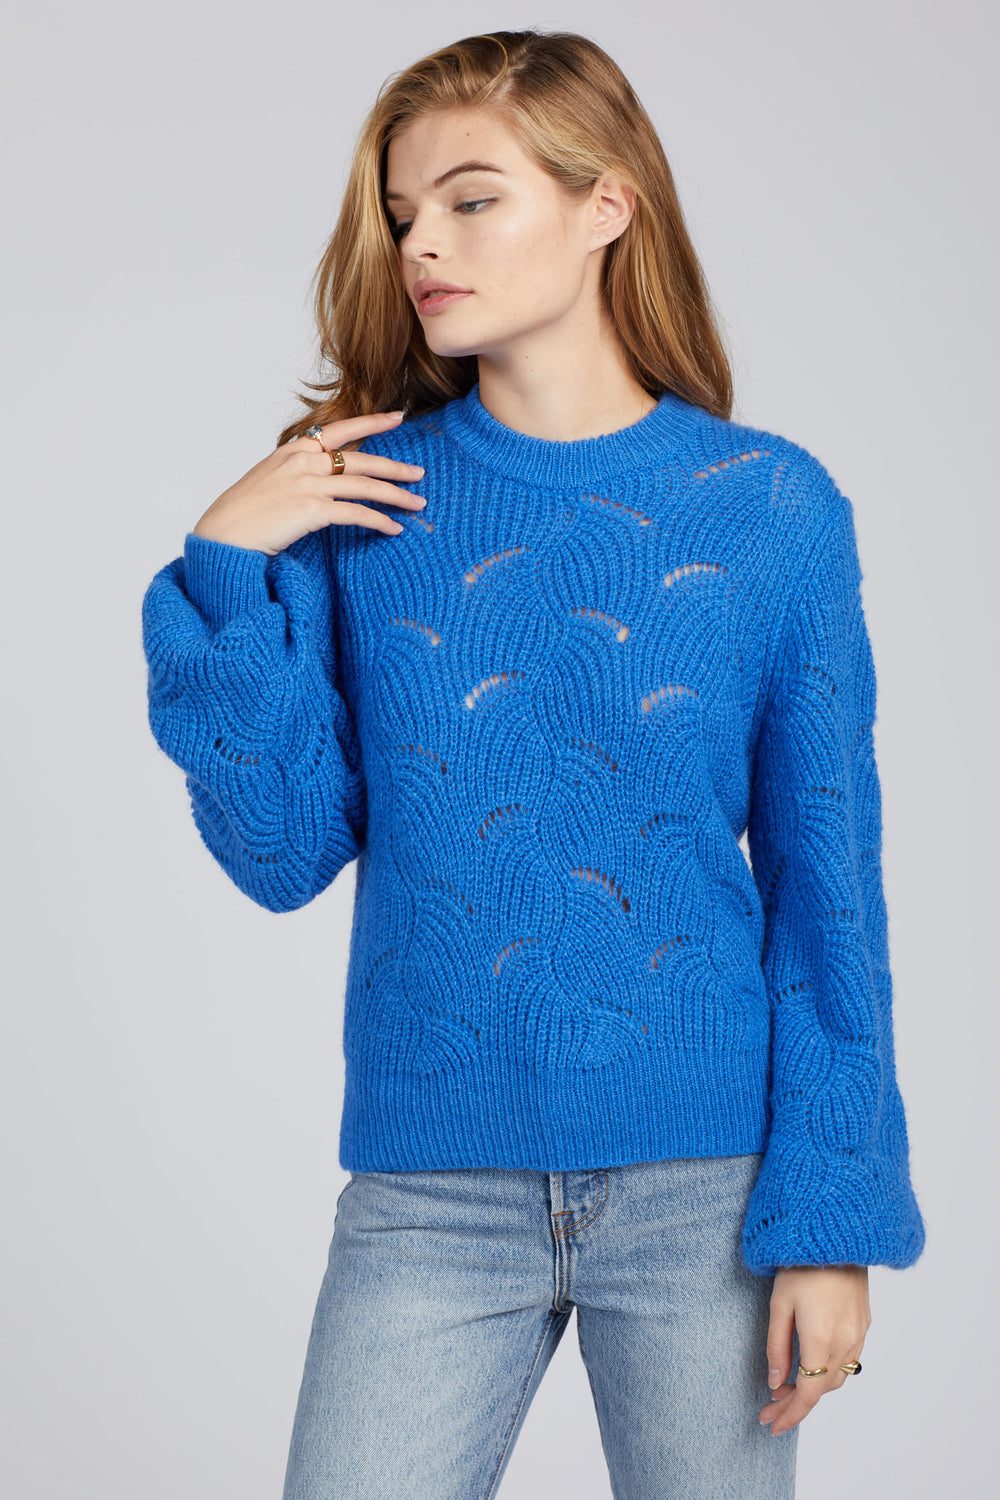 Rolla's Blue Laura Sweater